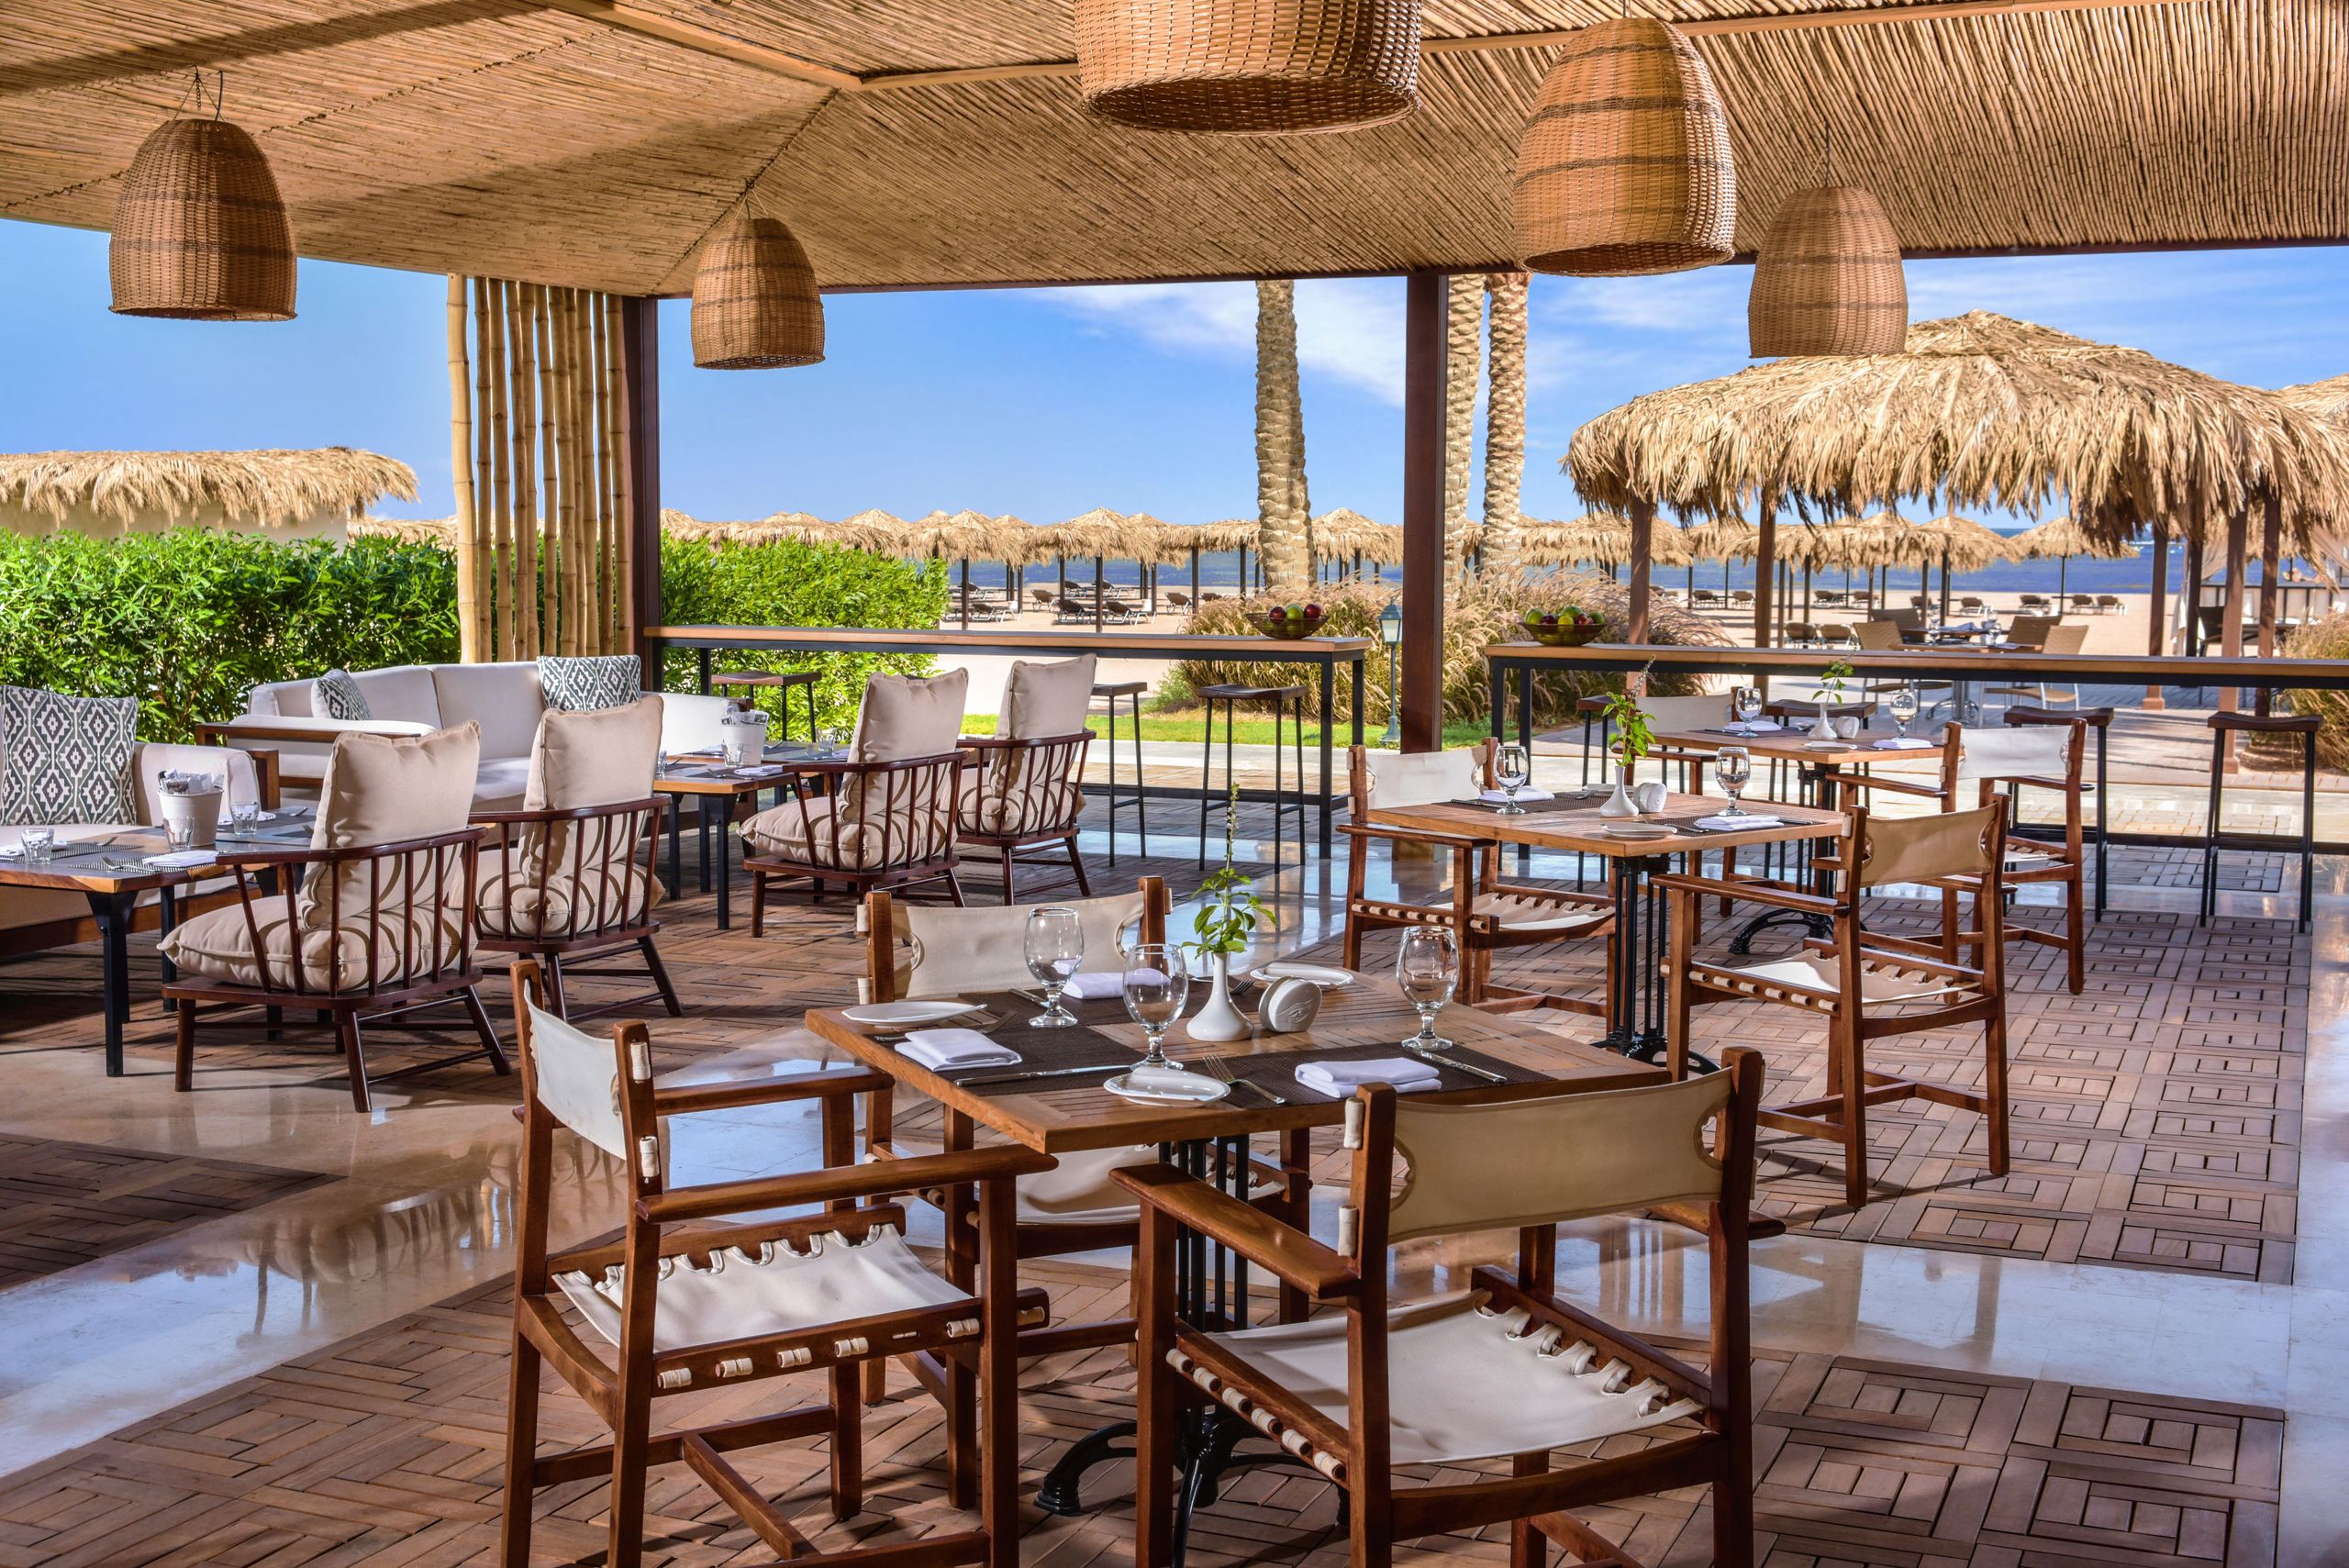 Steigenberger Alcazar - Sharm El Sheikh - Egypte - Sanafir Restaurant en Beach Bar